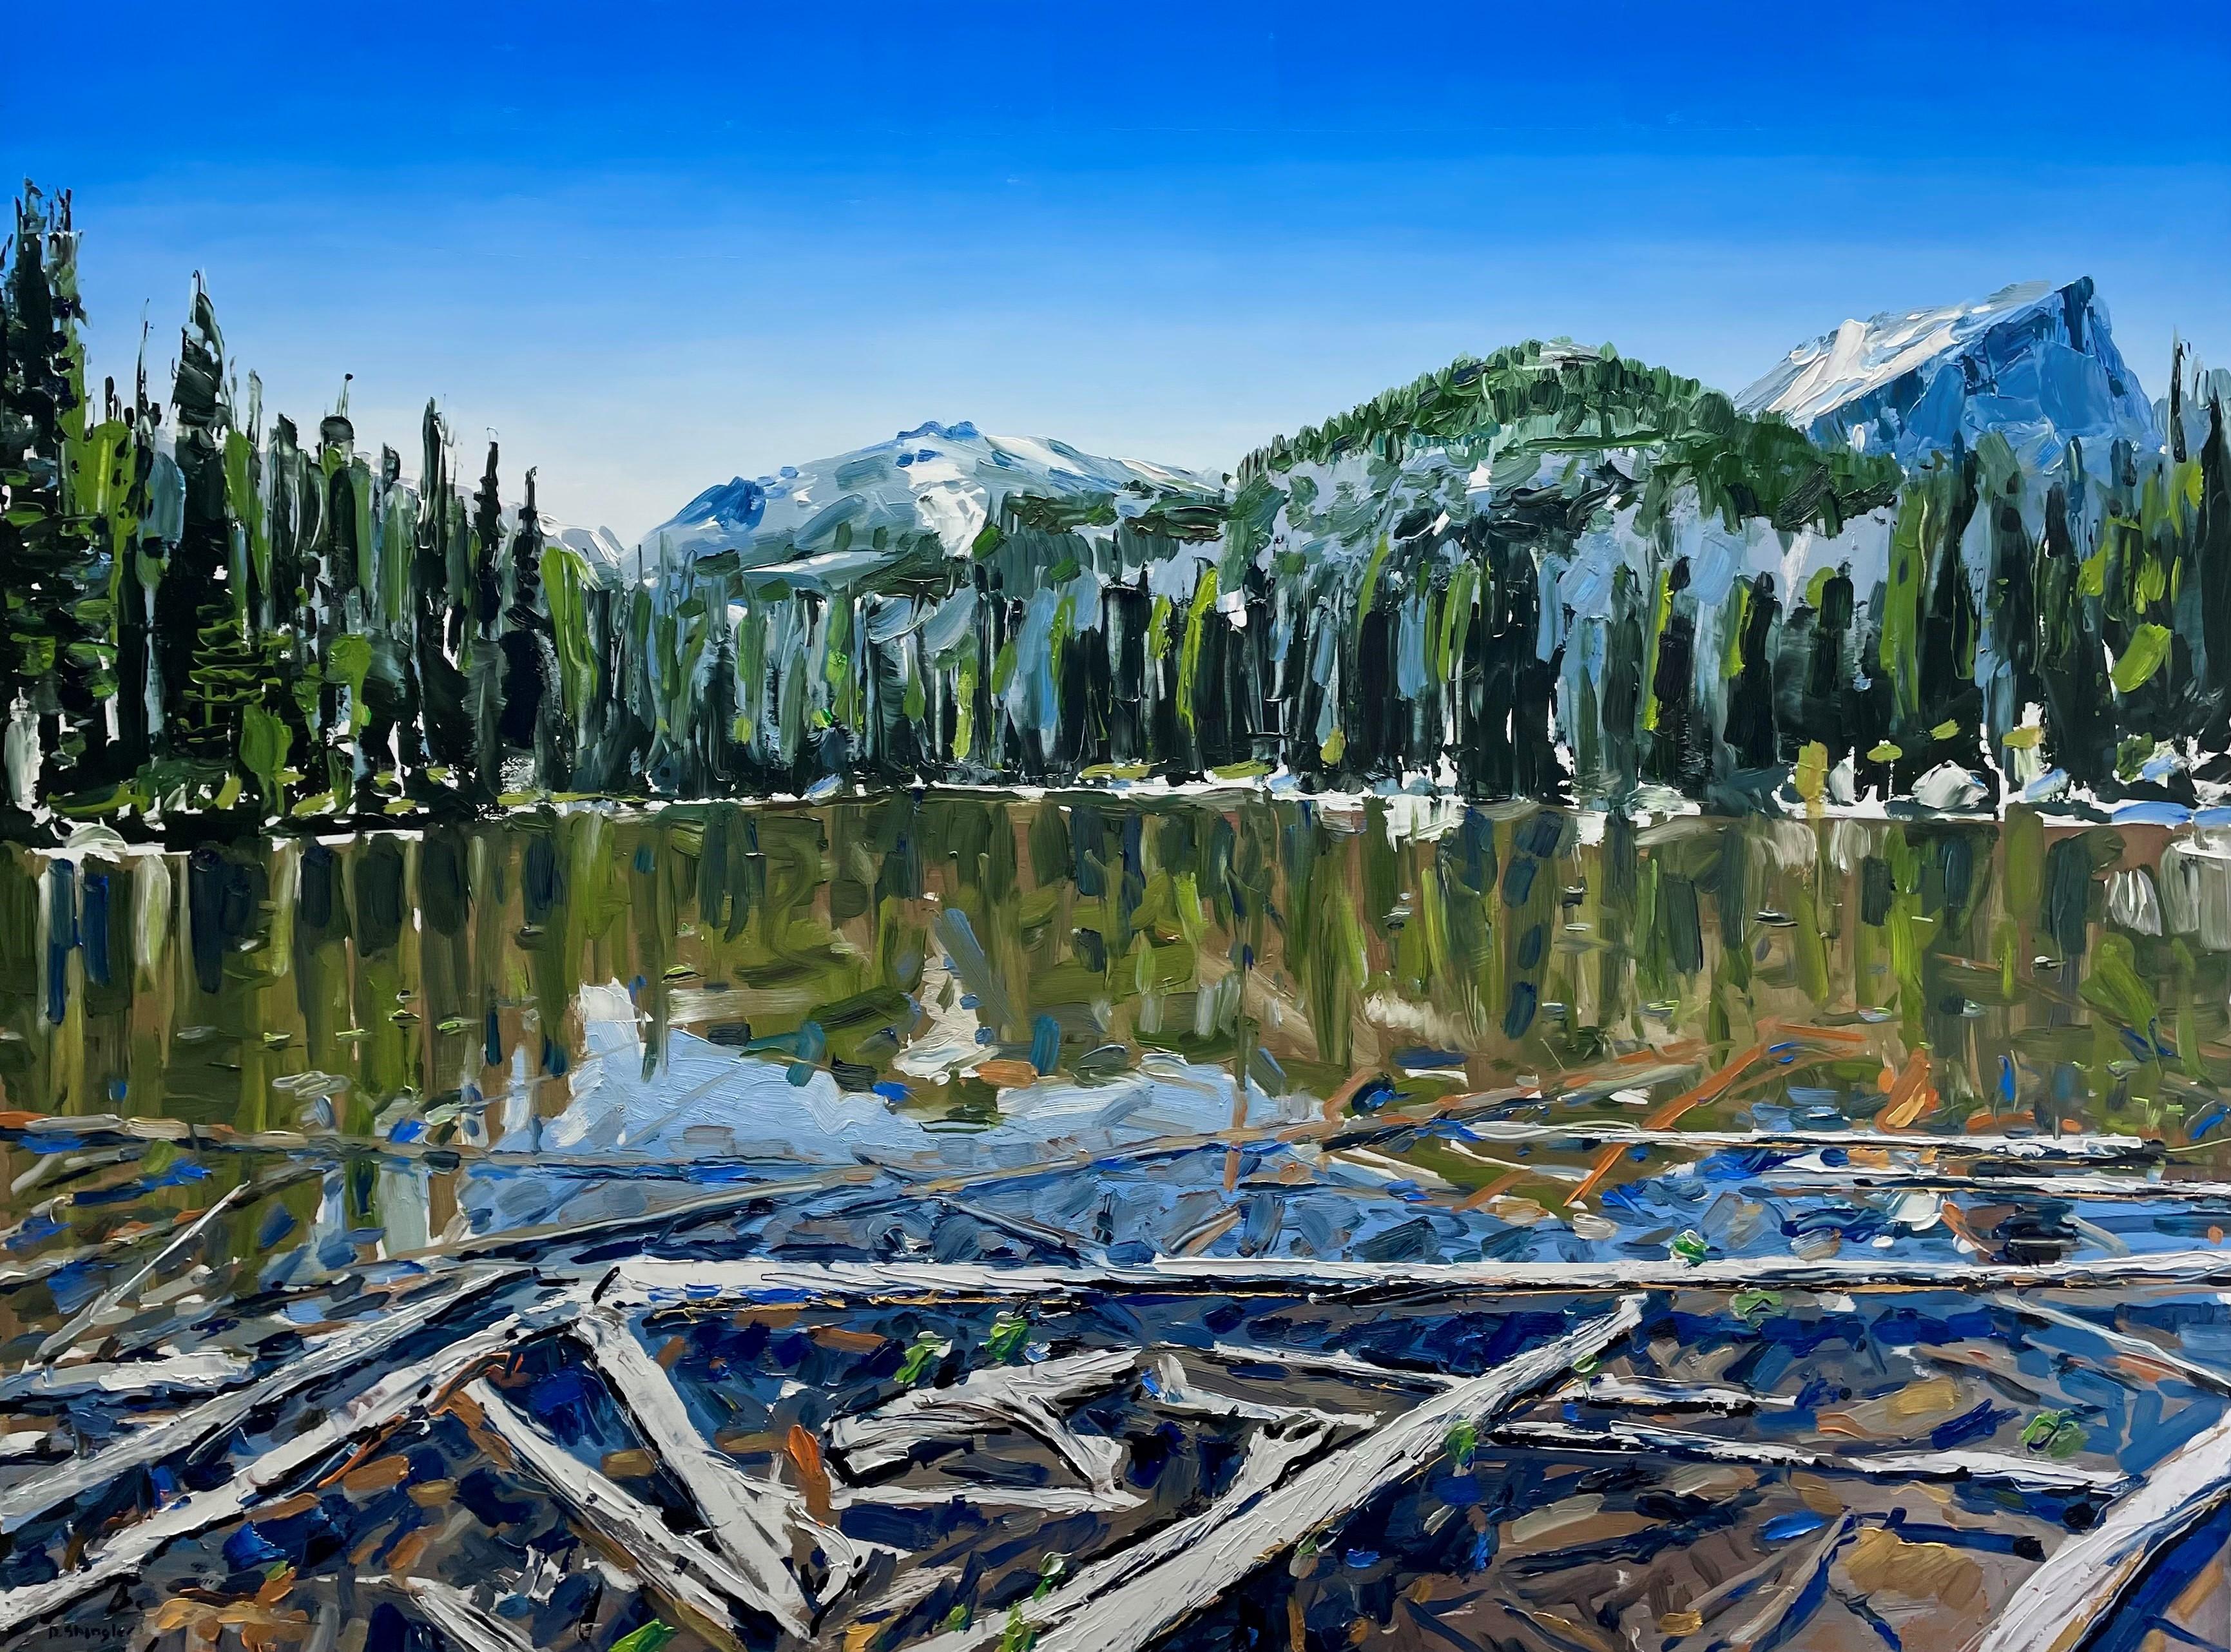 David Shingler Landscape Painting - Nymph Lake, Rocky Mountain Park, CO, Original Oil Painting